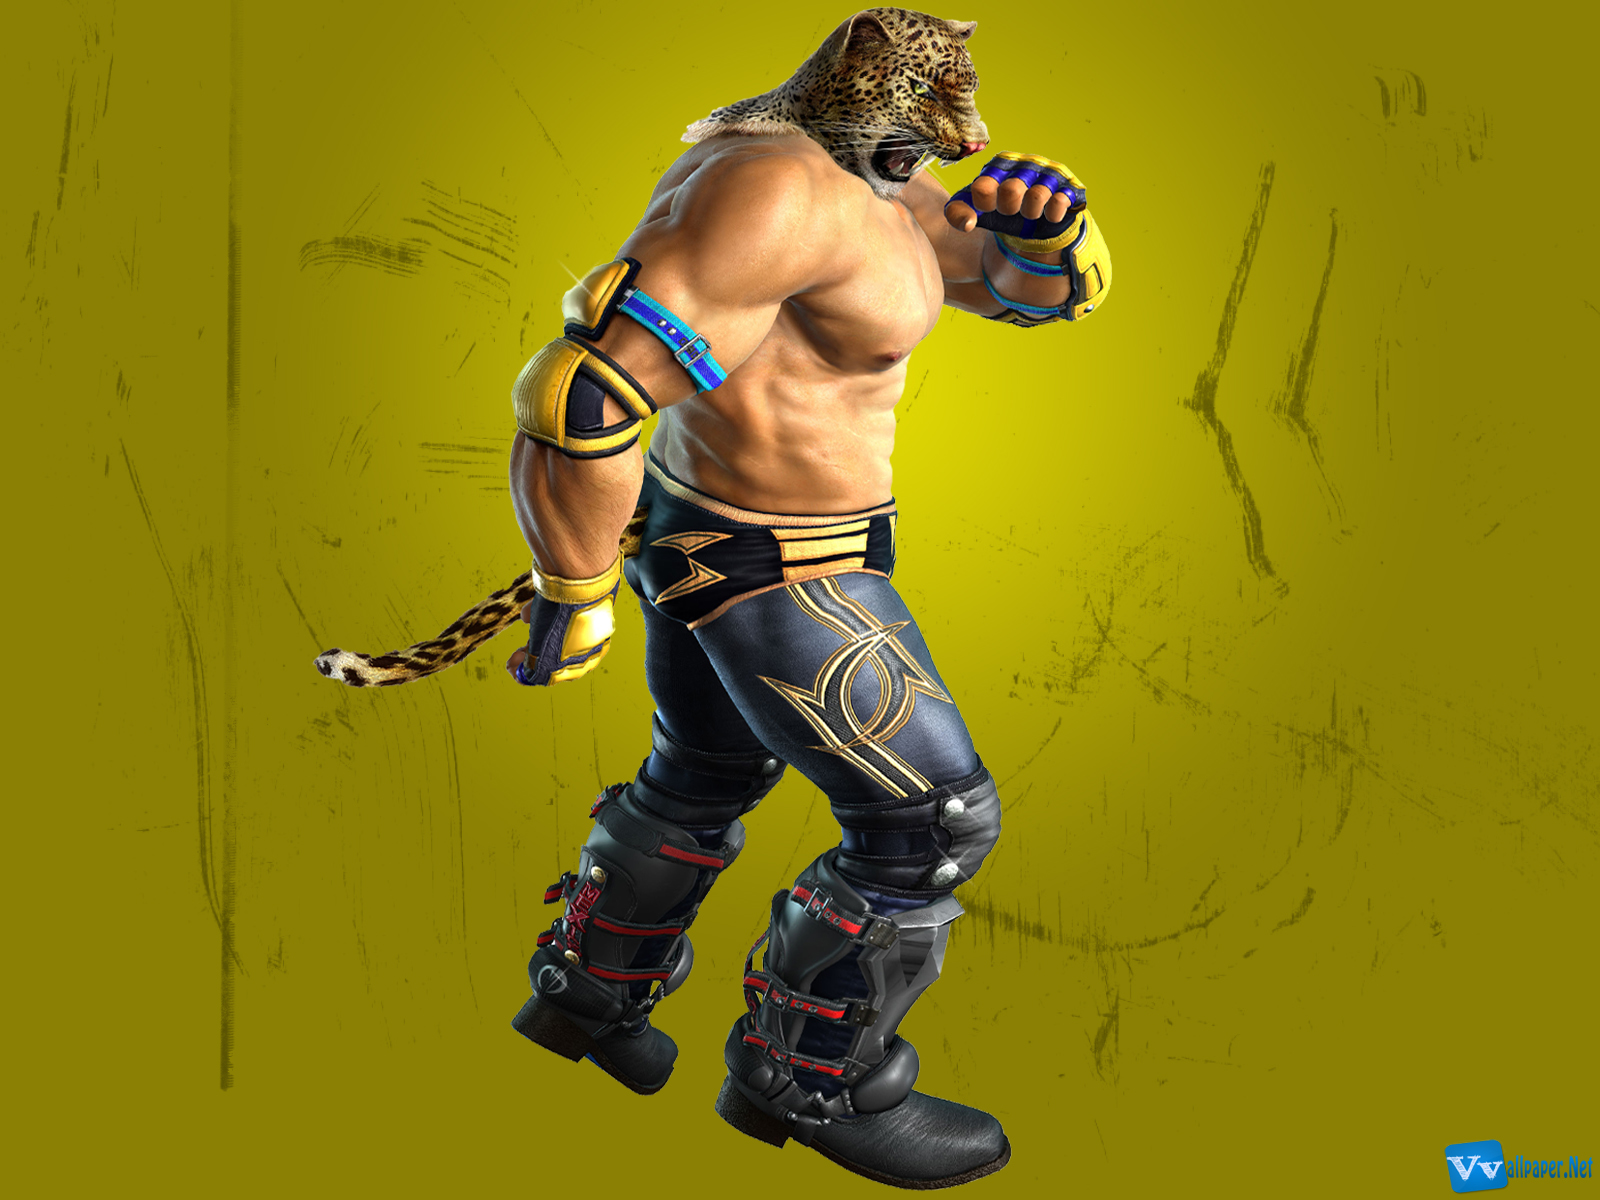 tekken king wallpaper,yellow,action figure,professional wrestling,wrestler,muscle